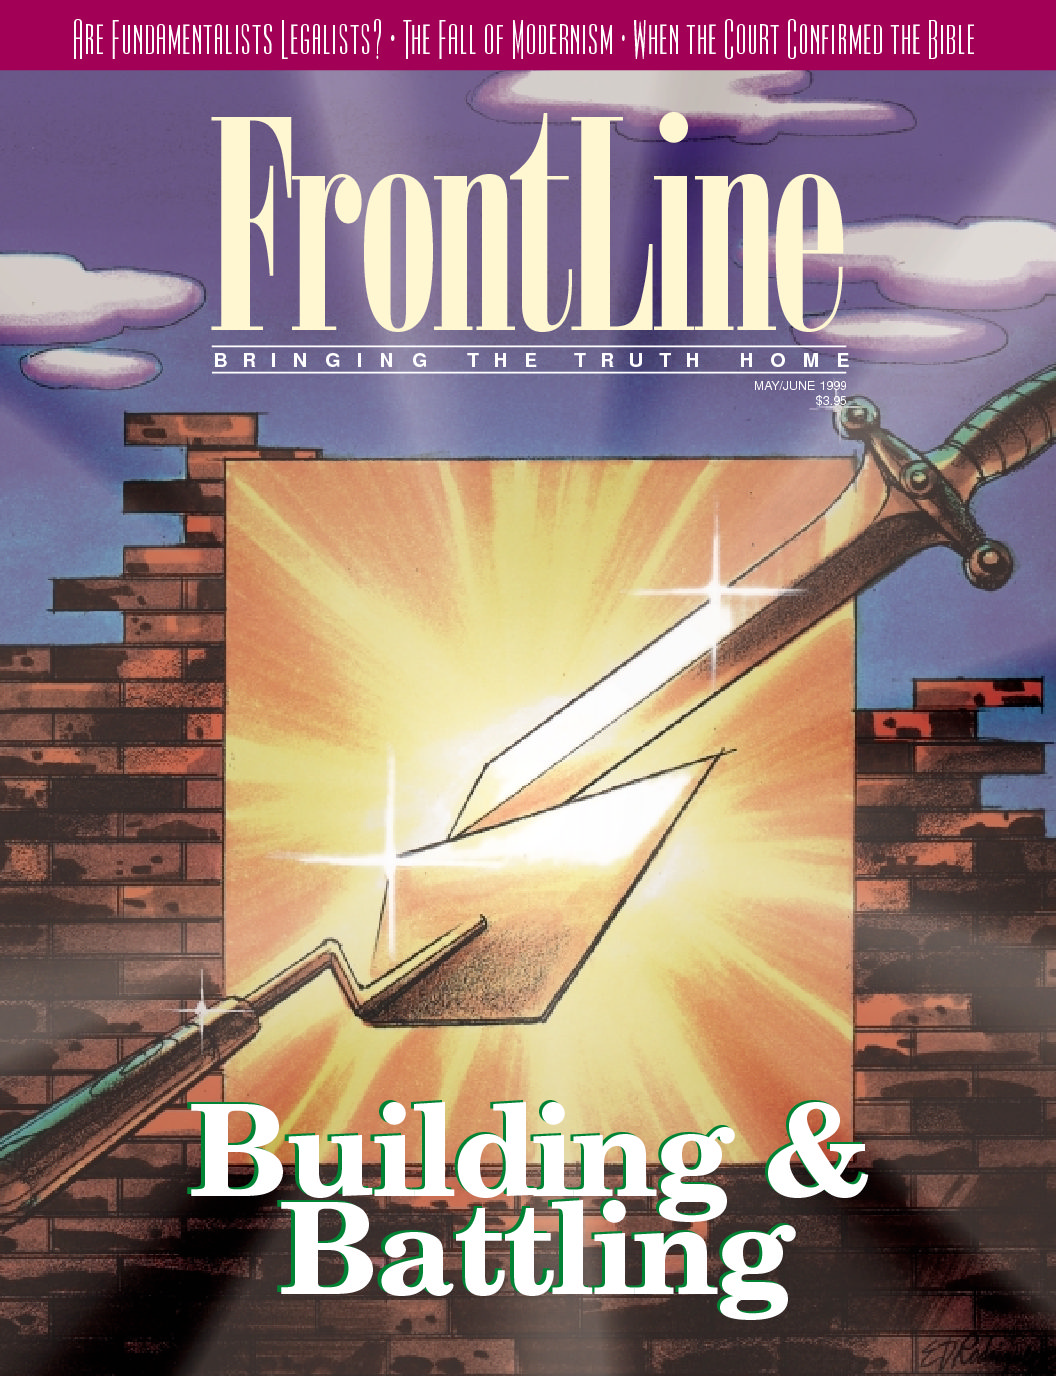 GATE: Frontline Union Announced for G123 Platform - QooApp News